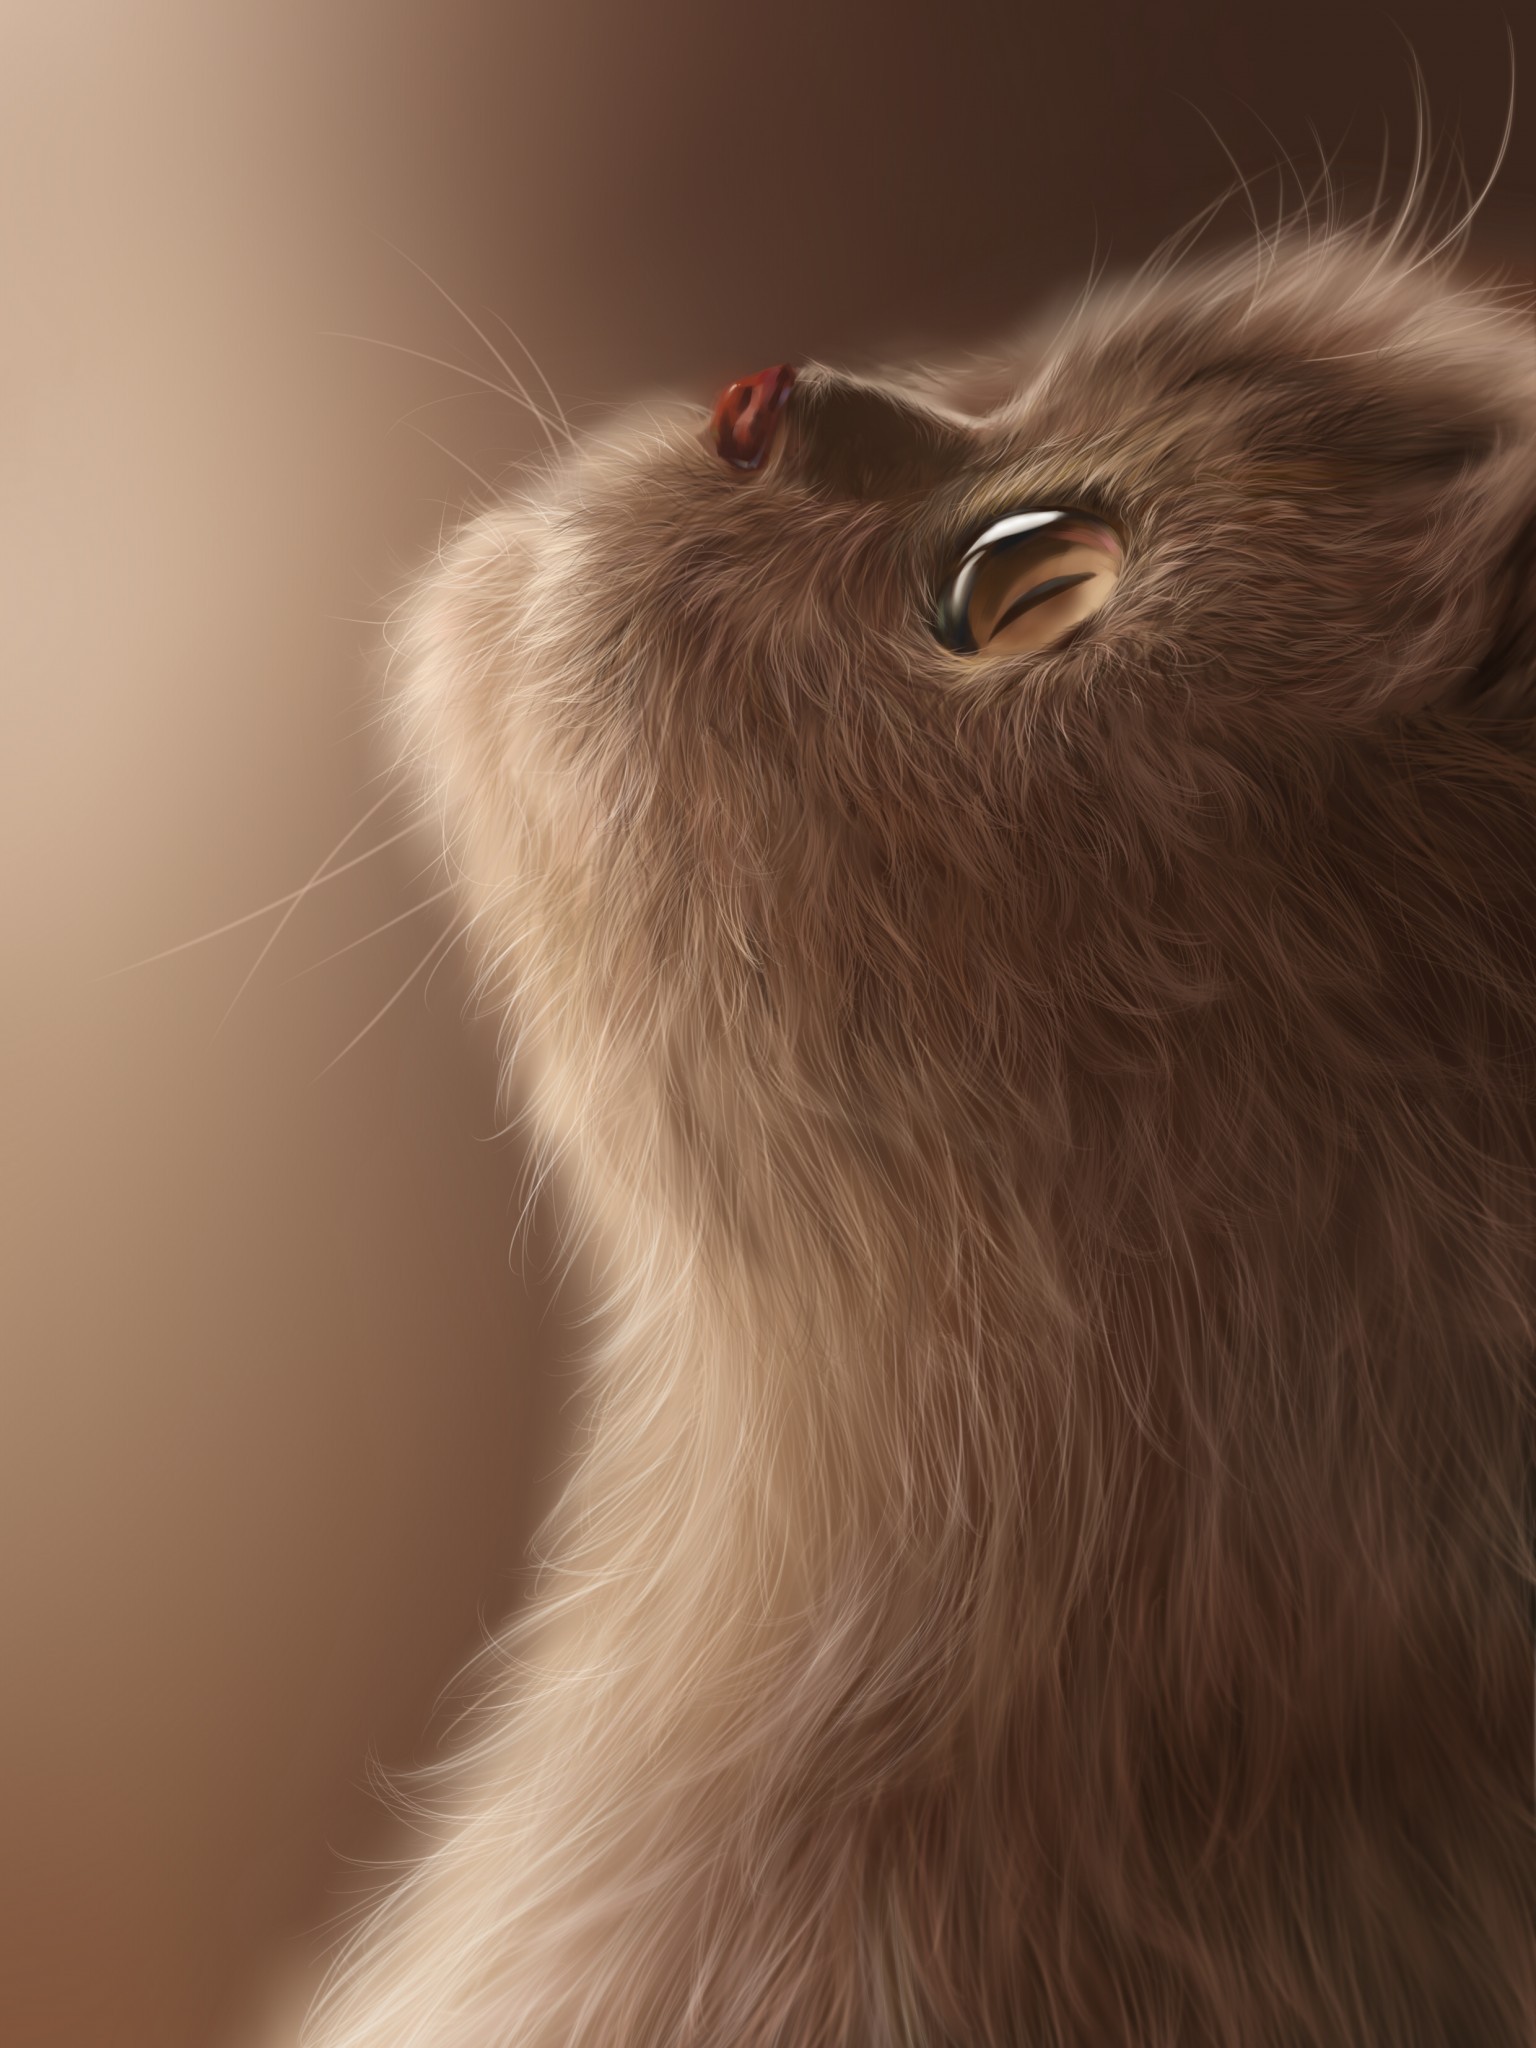 Cat, Digital Art, Fluffy, Cute, Neko - Domestic Long-haired Cat - HD Wallpaper 